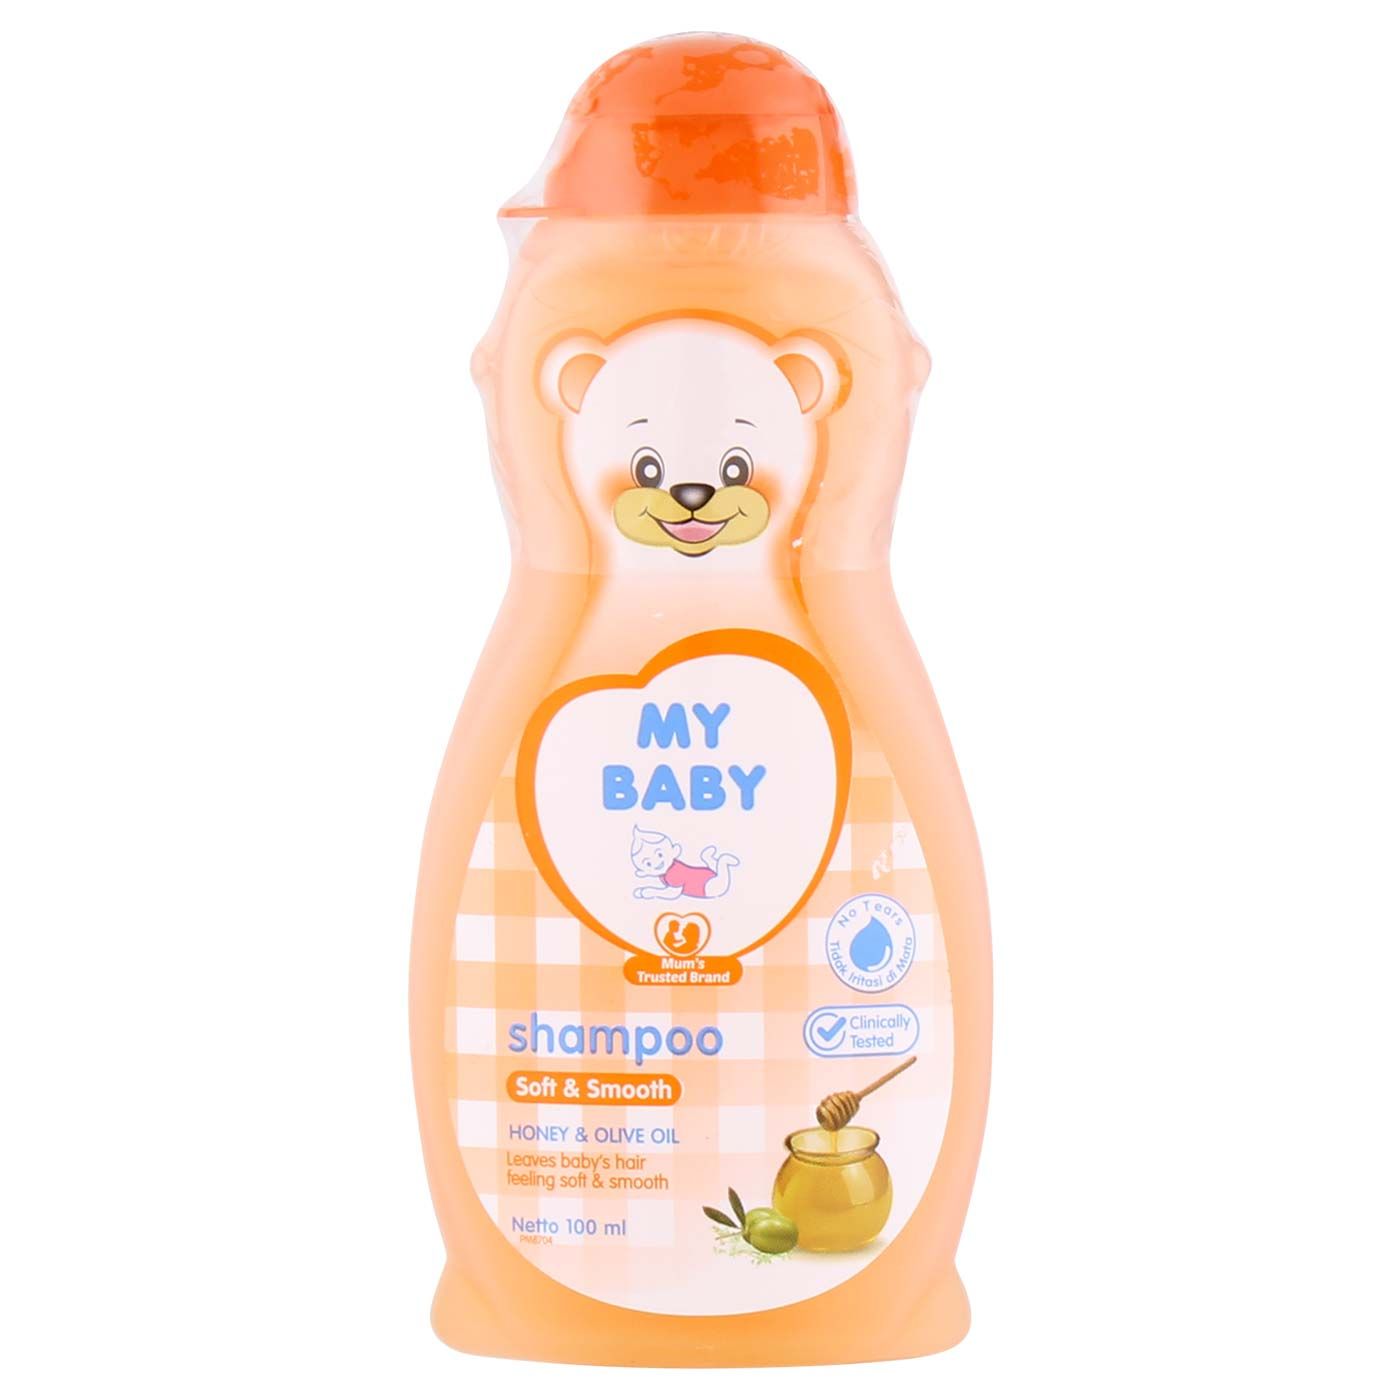 My Baby Shampoo Soft & Smooth 100ml - 2